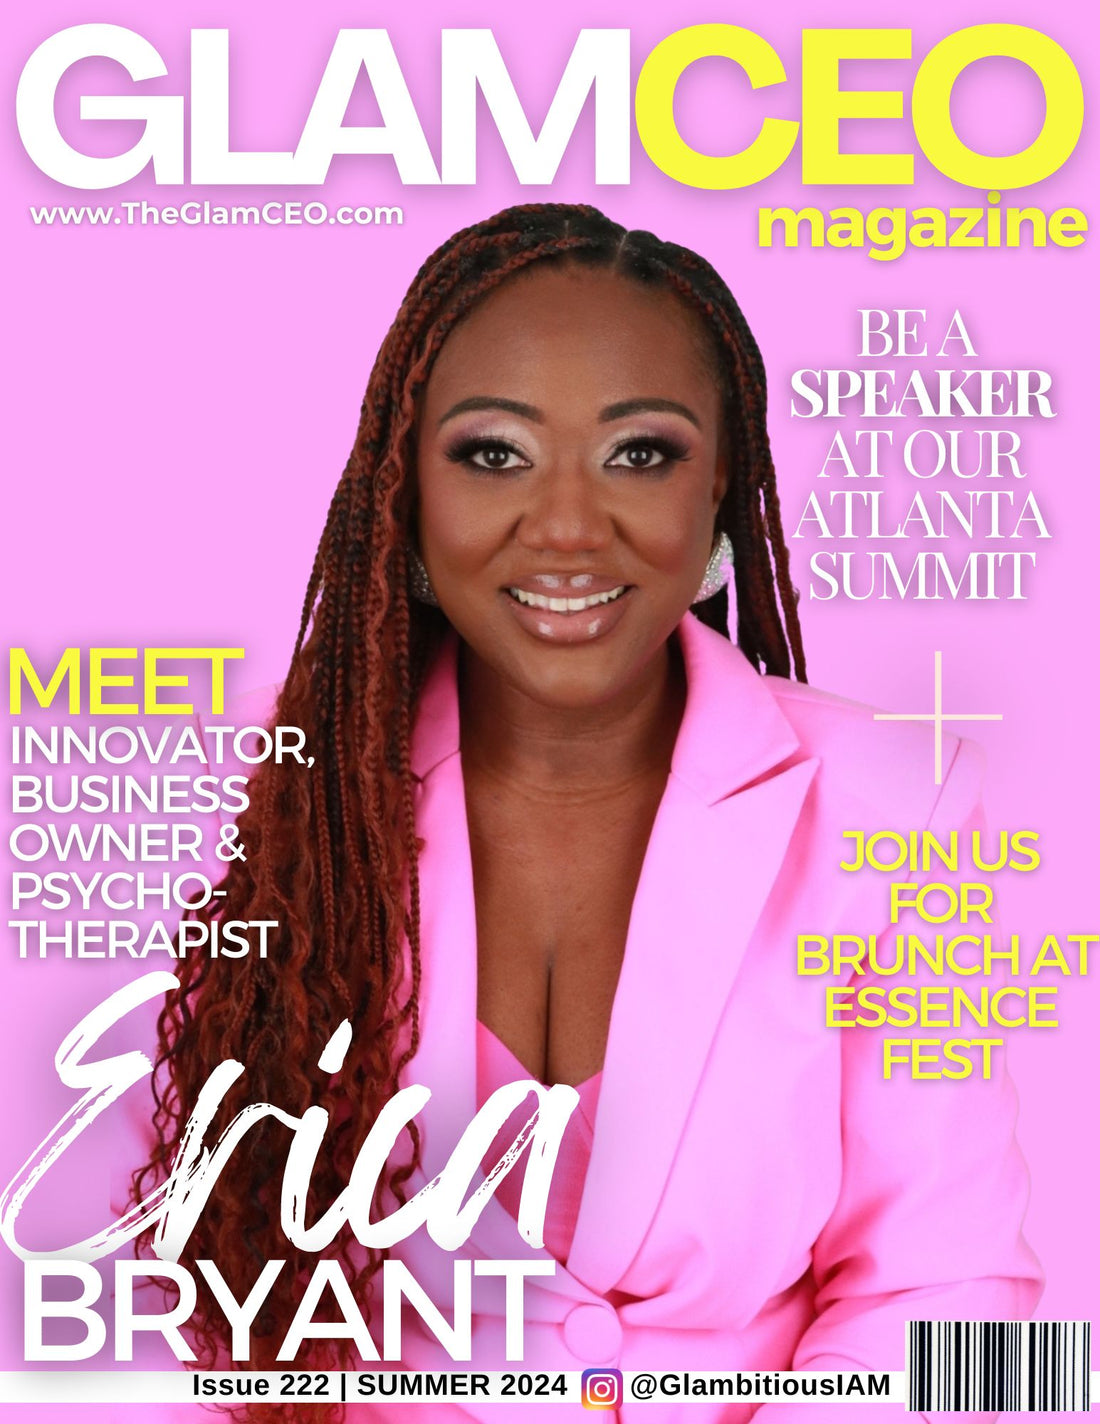 Meet Glam CEO: Erica Bryant!